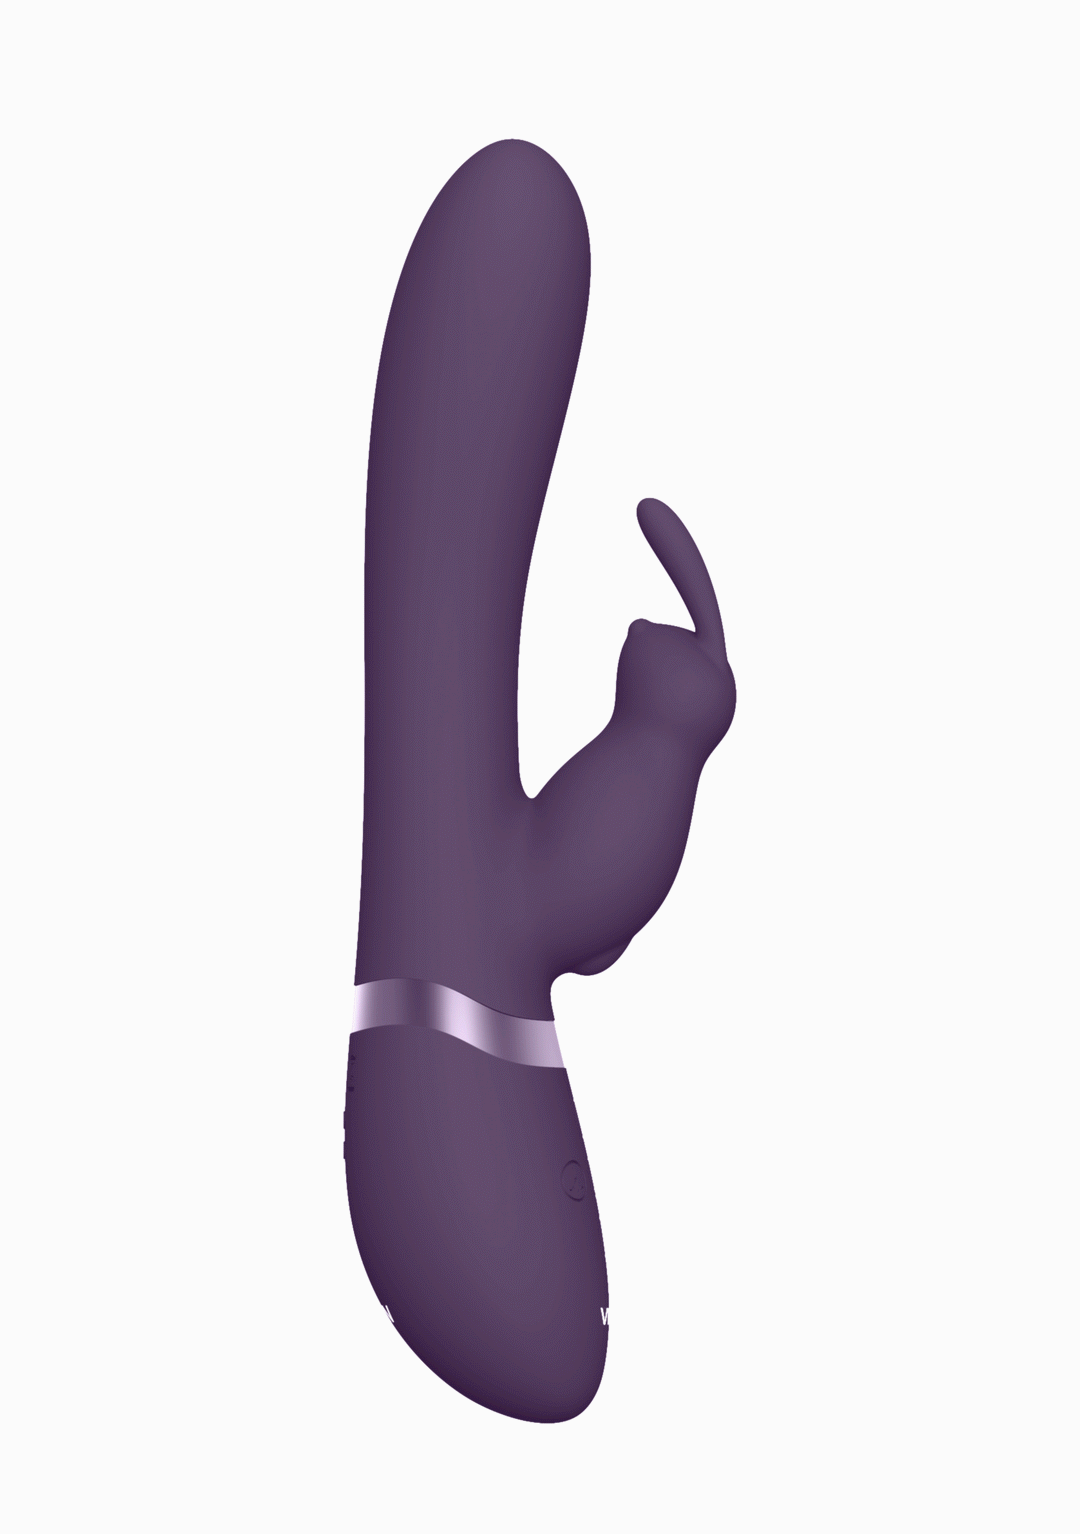 Shots Vive Taka Inflatable Rabbit Vibrator - Purple